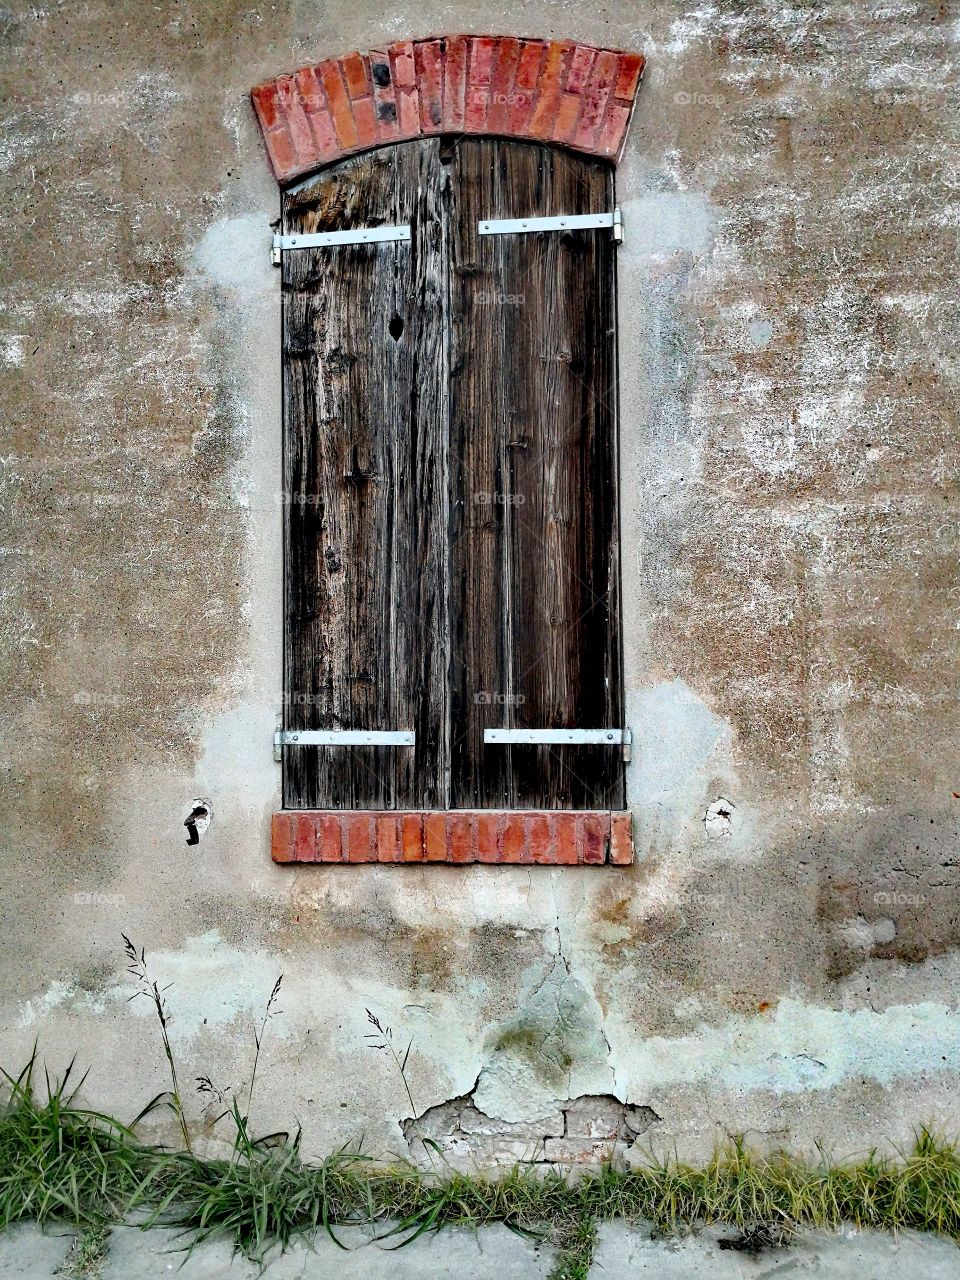 Ruin window